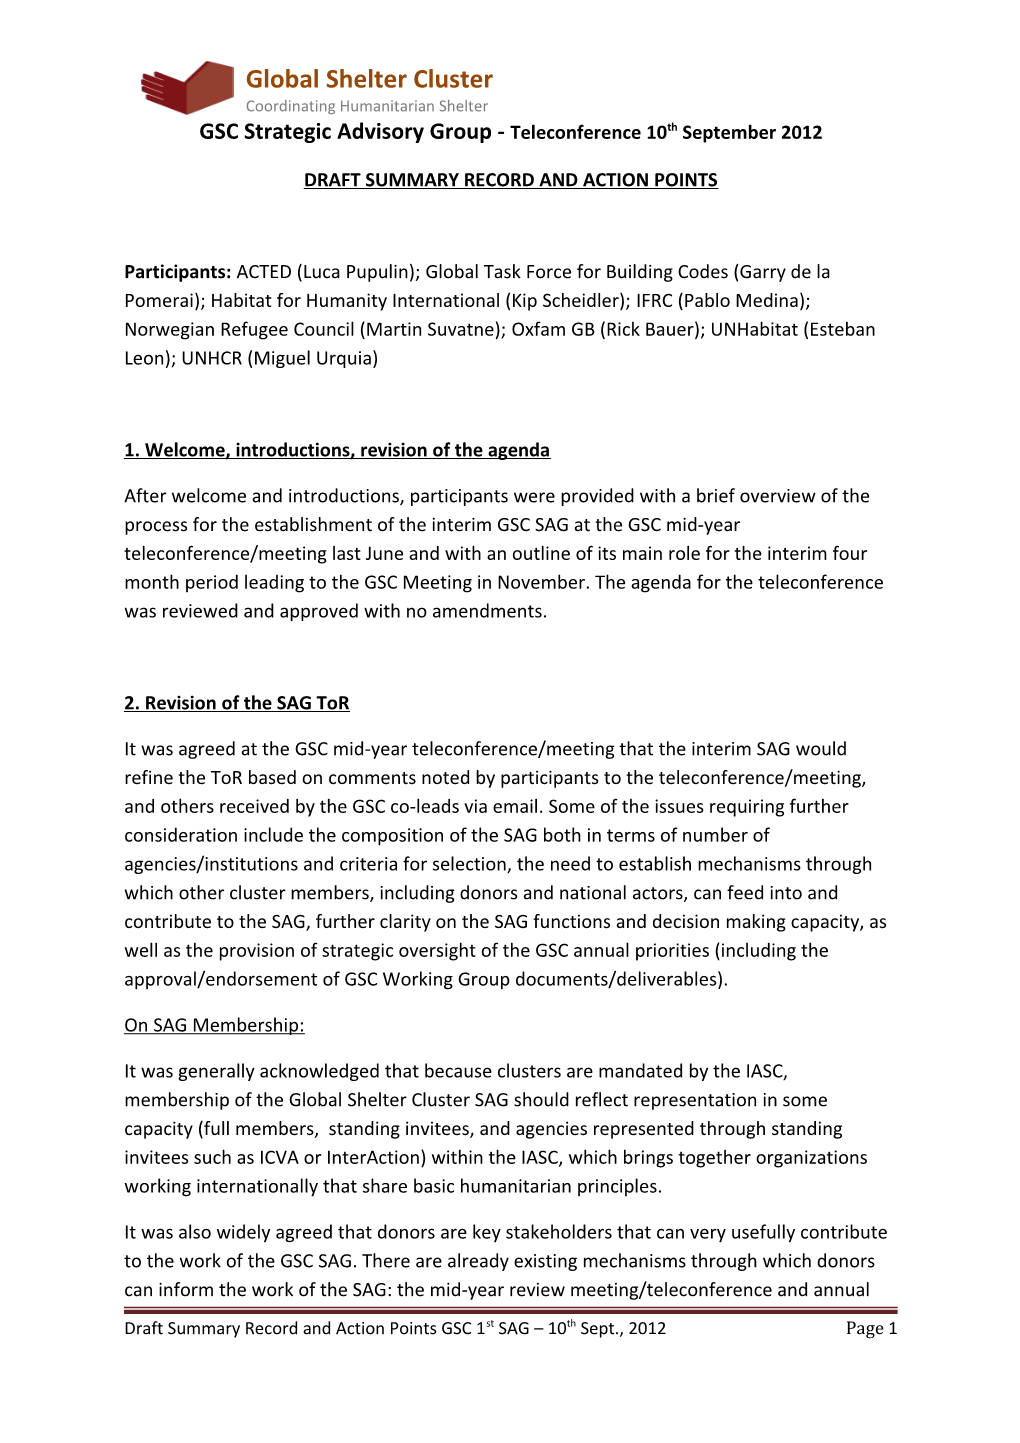 GSC SAG Draft Summaryrecord and Action Points V1